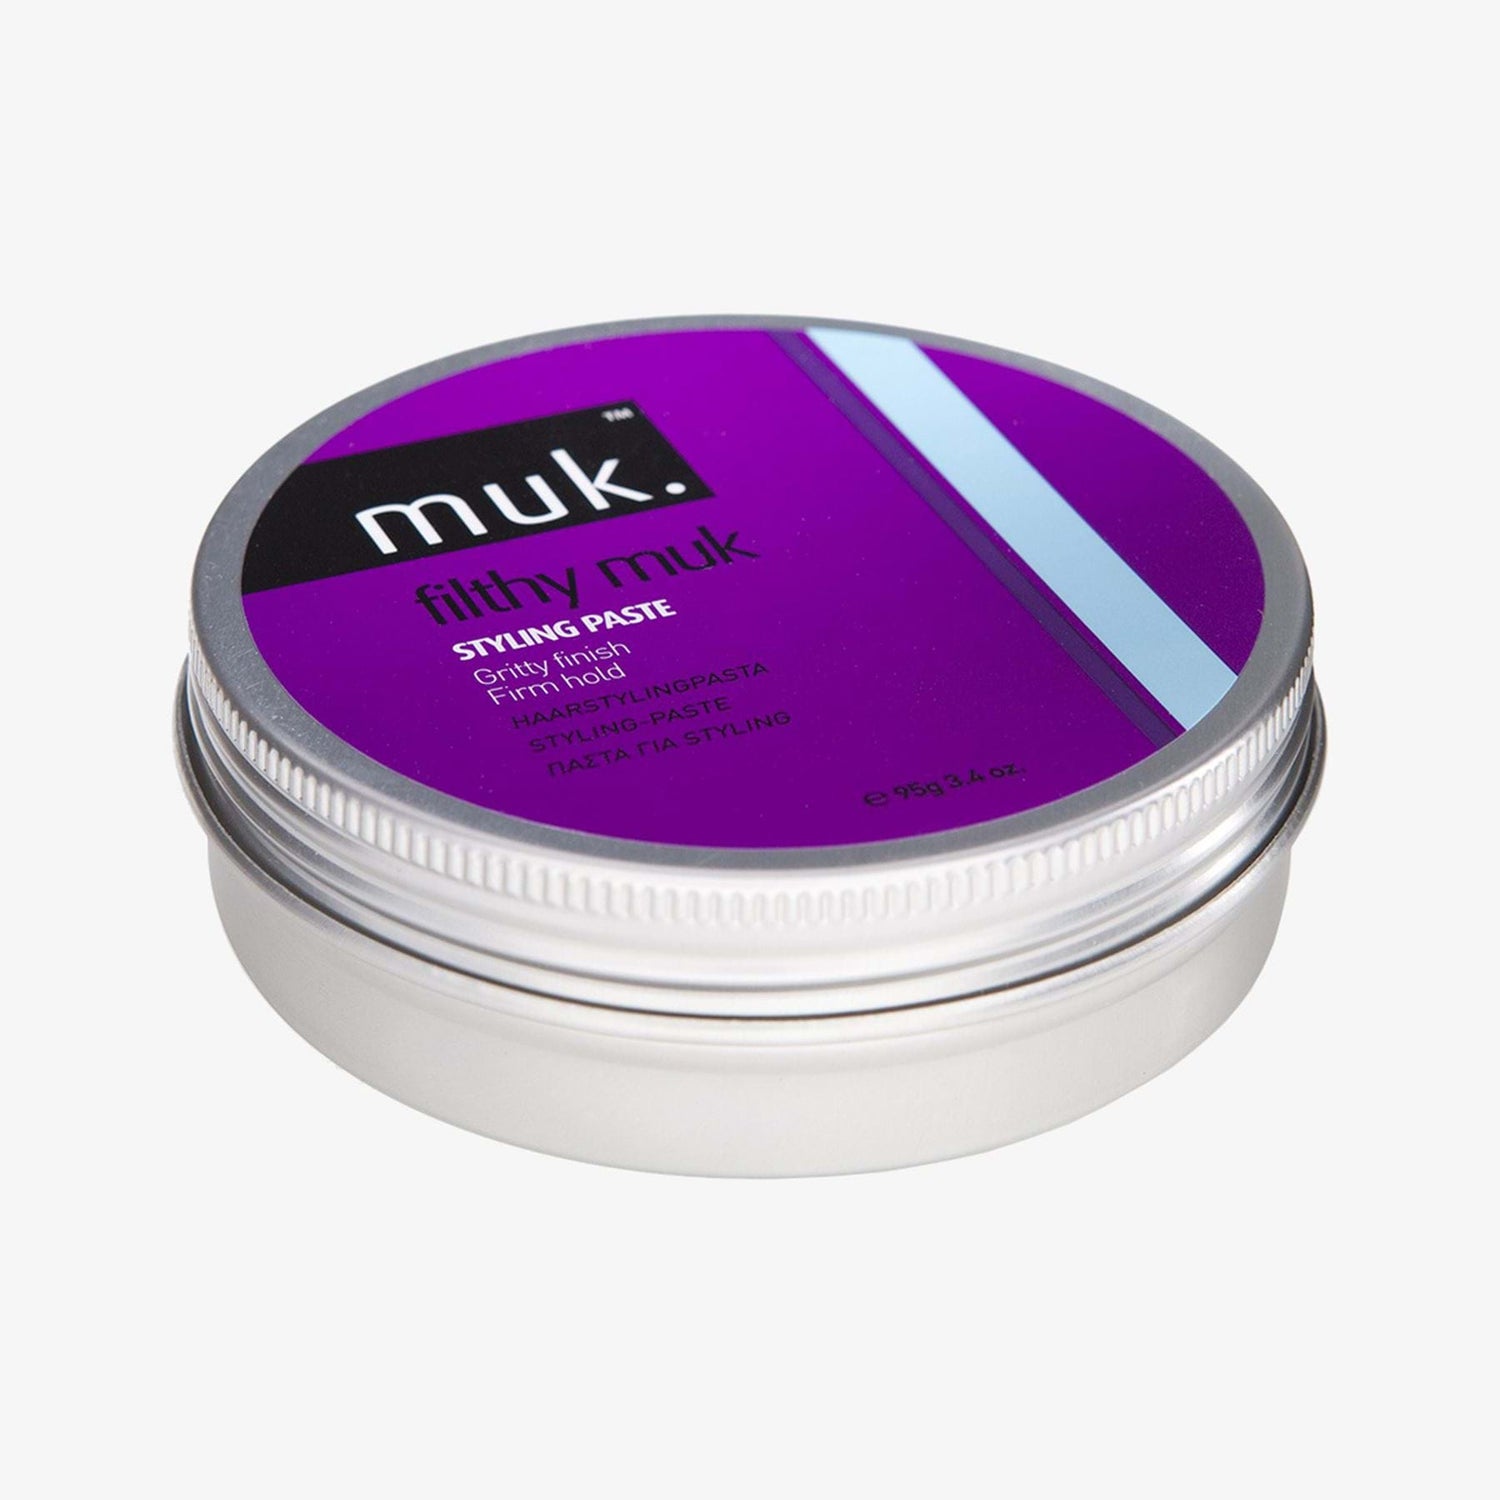 MUK Filthy Muk Styling Paste - 50g